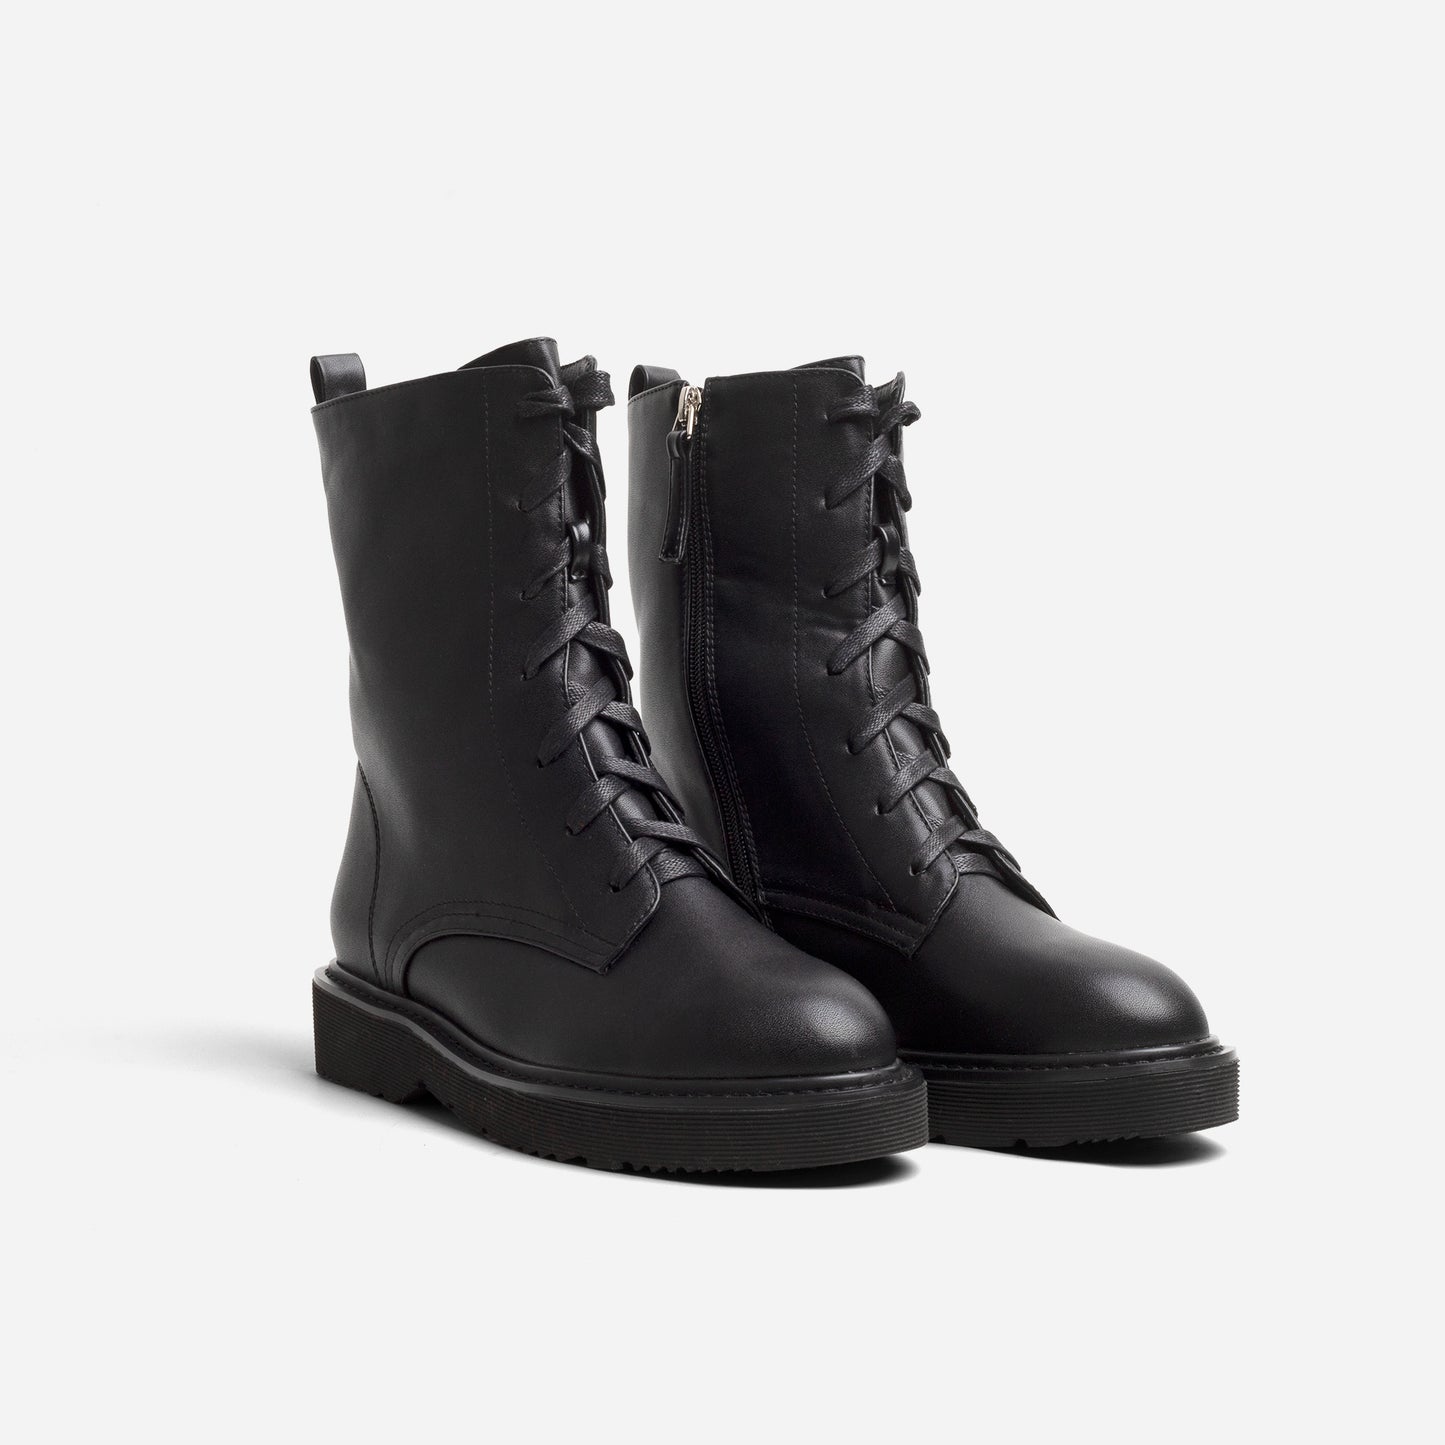 ARI Boots, Black